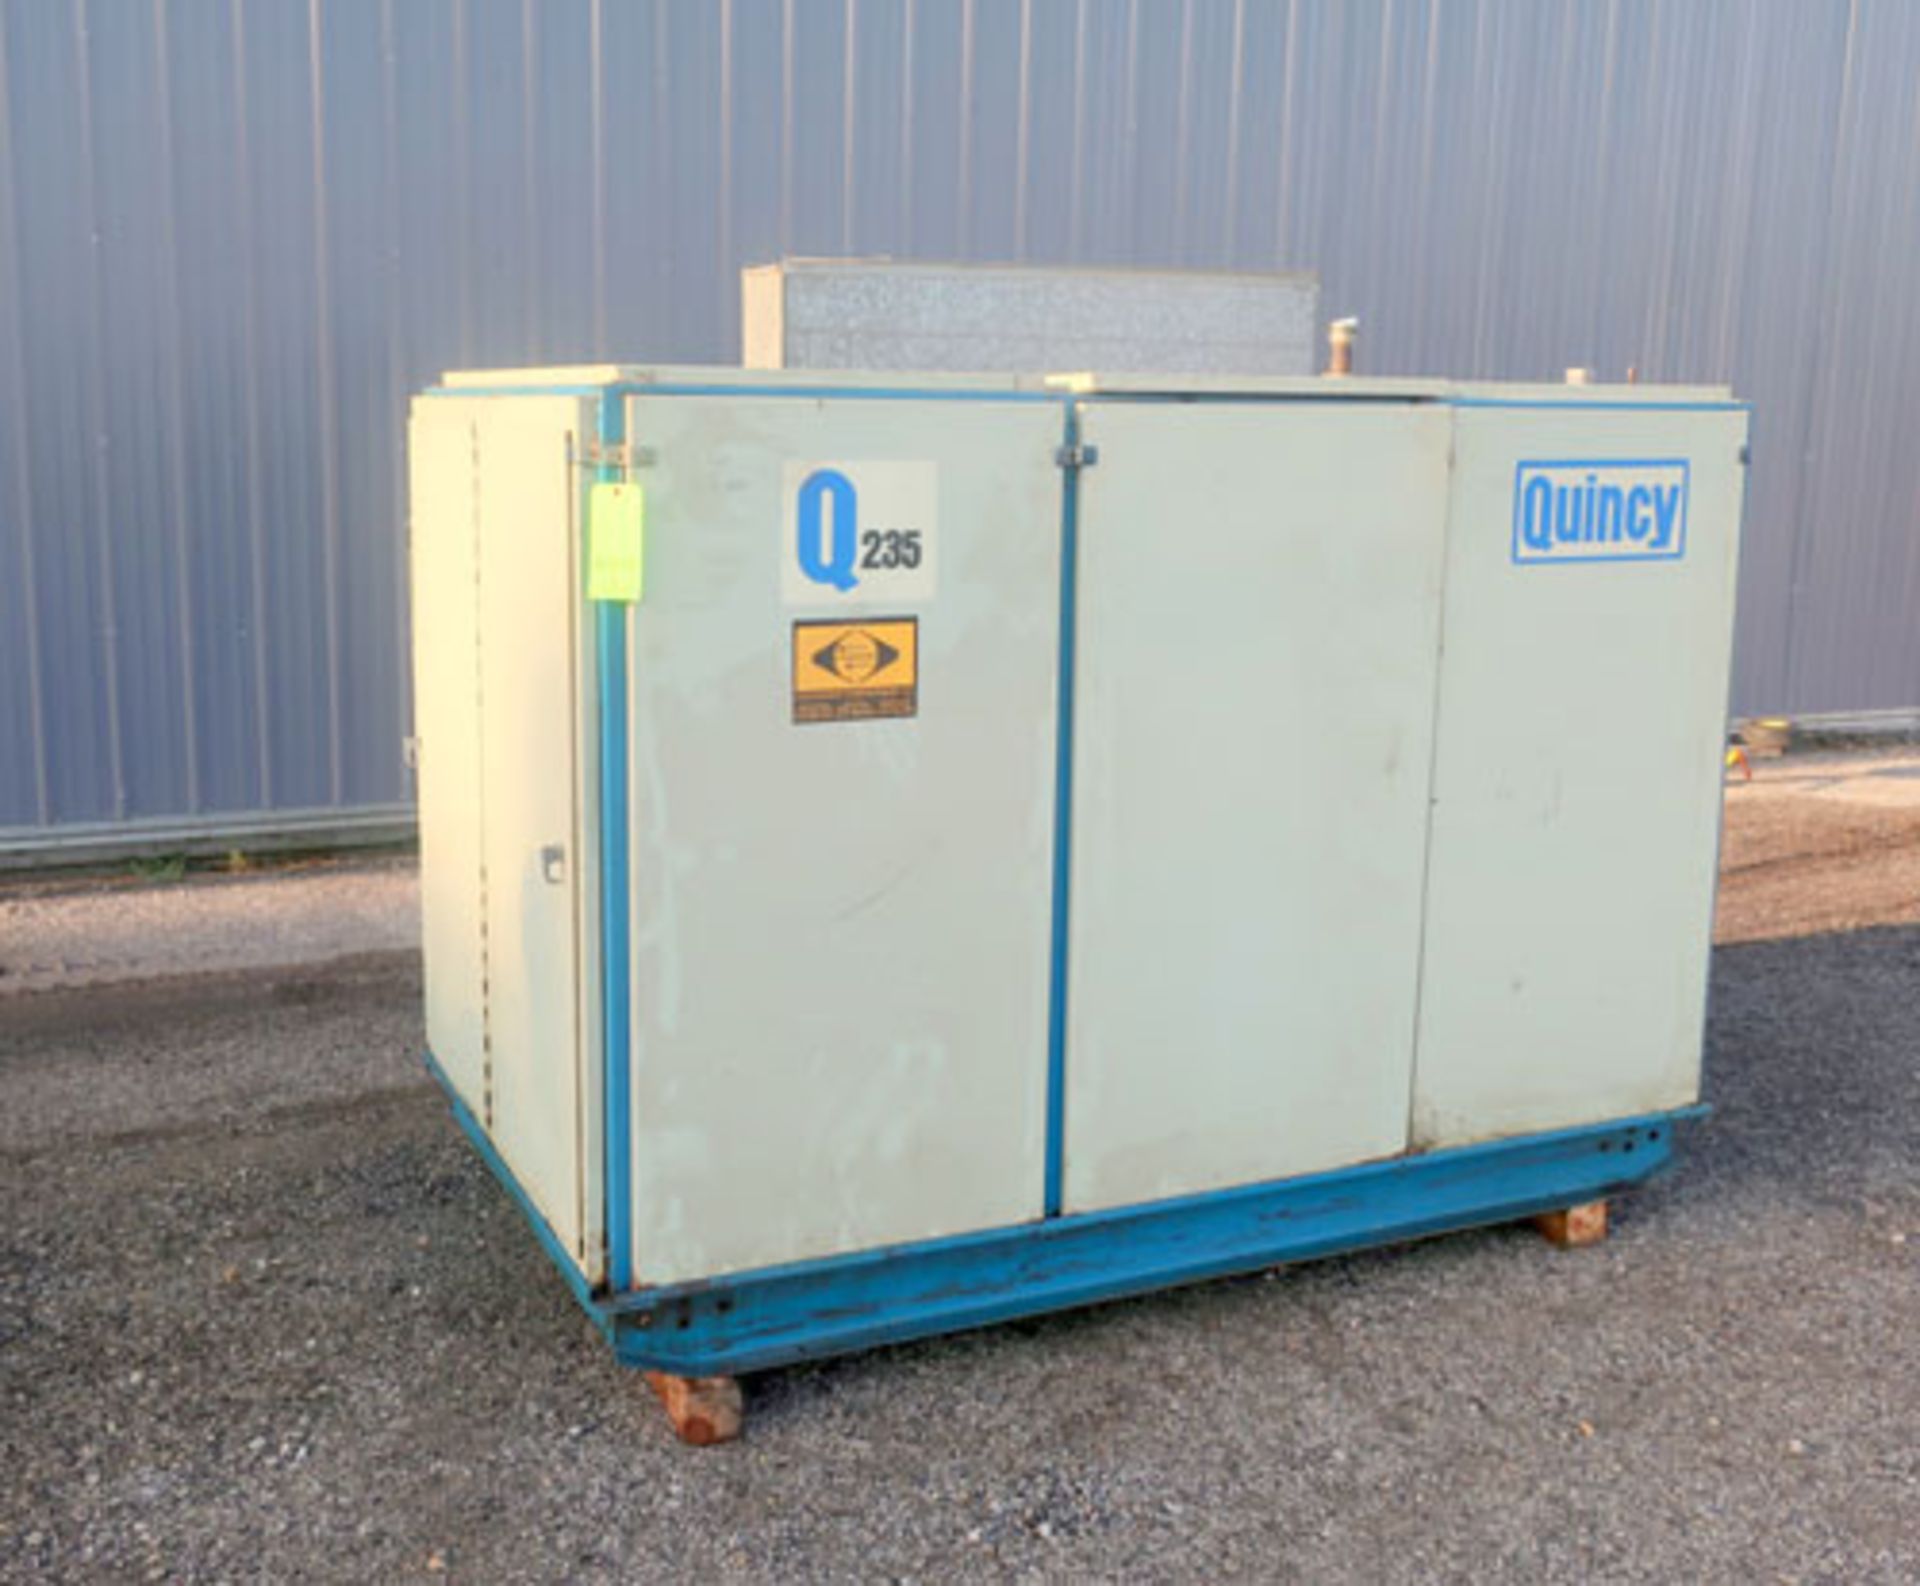 Quincy Q235 Rotary Screw 50 HP Air Compressor, Model QSI-235 ACA 3. Serial # 204-102-0-8585-B.